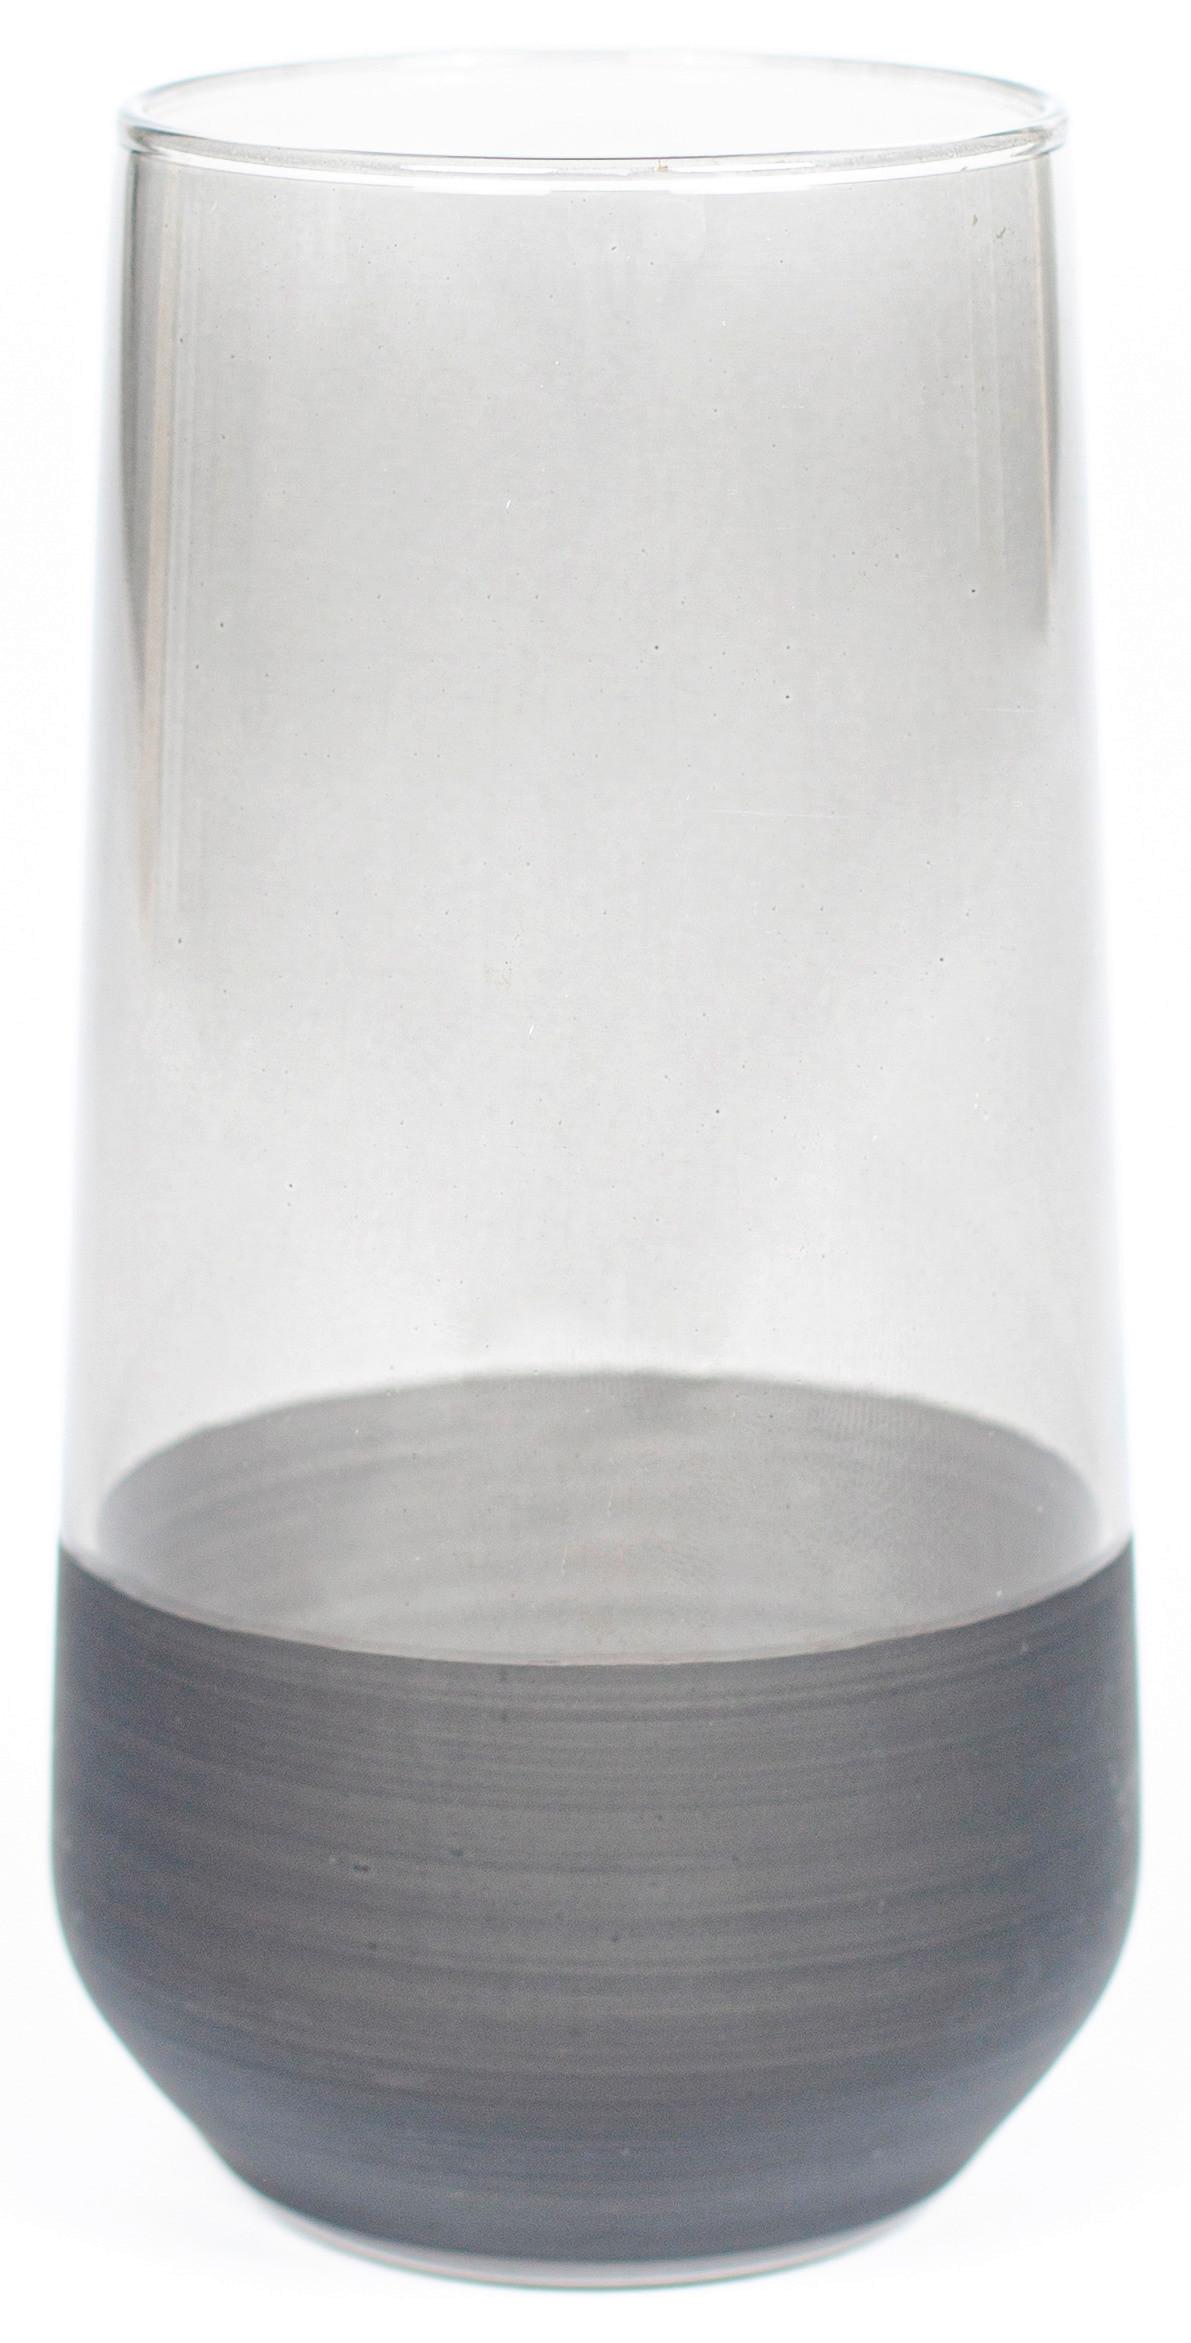 Longdrinkglas Black ca. 470ml - Schwarz, MODERN, Glas (6,5/15cm) - Premium Living